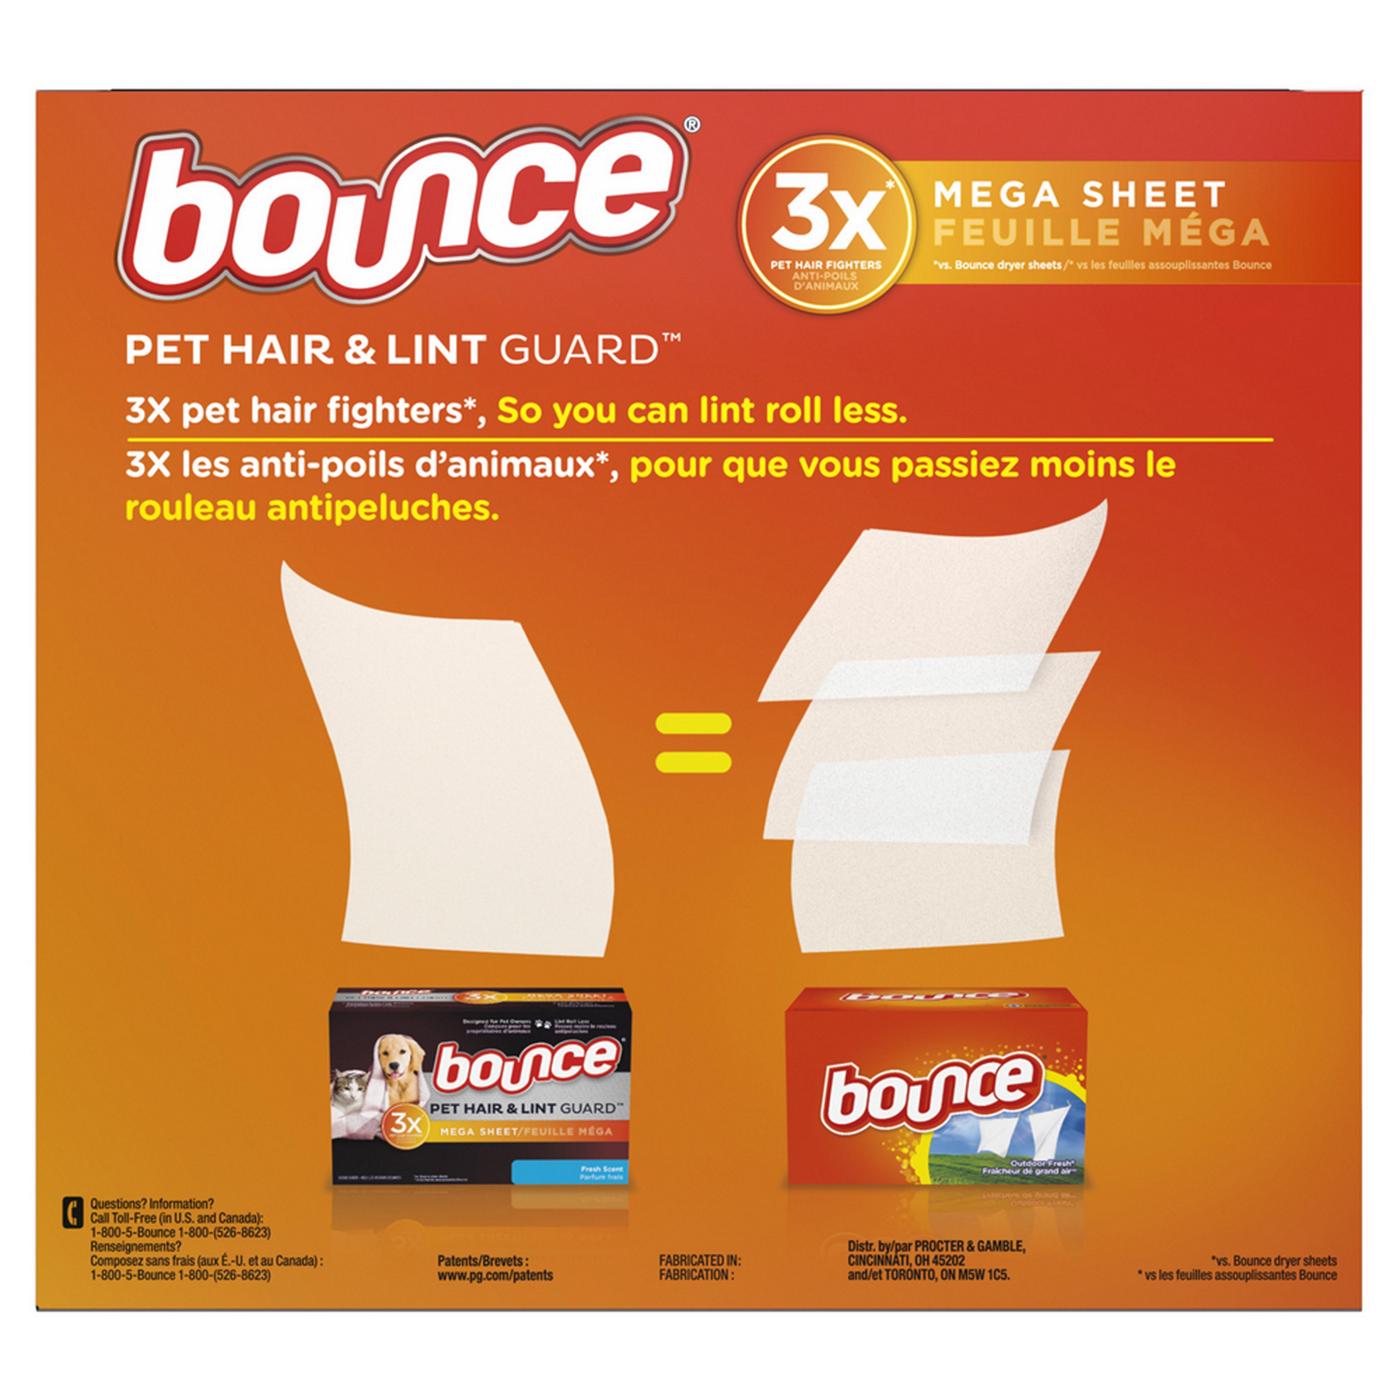 Bounce - Dryer Sheets and Mega Sheets